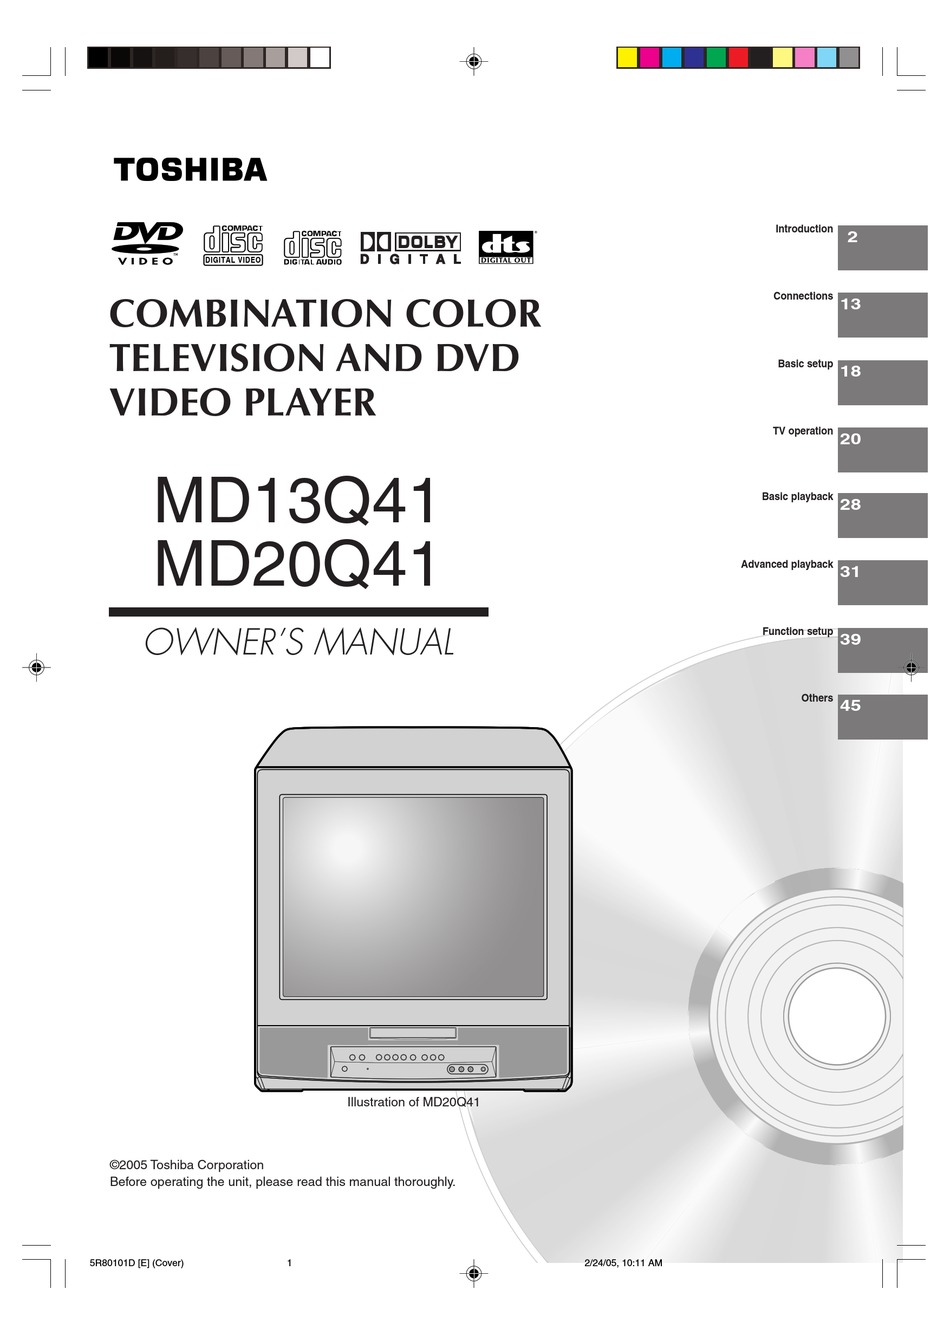 Инструкция телевизора toshiba. Toshiba q20. Toshiba 2005. Телевизор Тошиба инструкция по эксплуатации на русском. Телевизор Toshiba md20h62 (Retro) 20 inch CRT Flat Screen TV/DVD Combo no Remote схема.